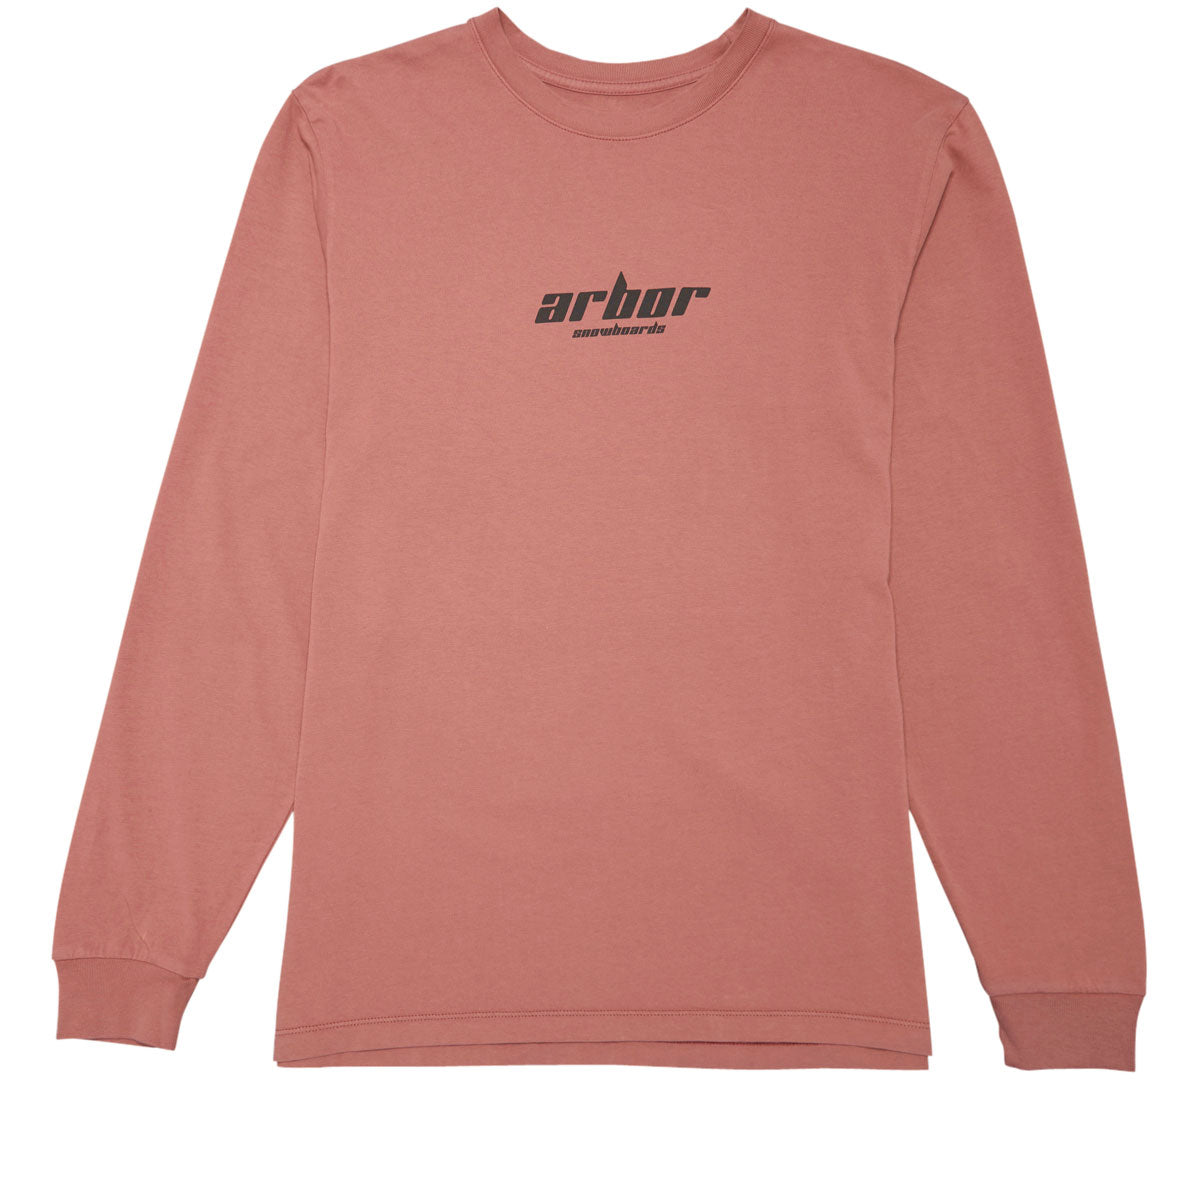 Arbor Draft T-Shirt - Plum image 1